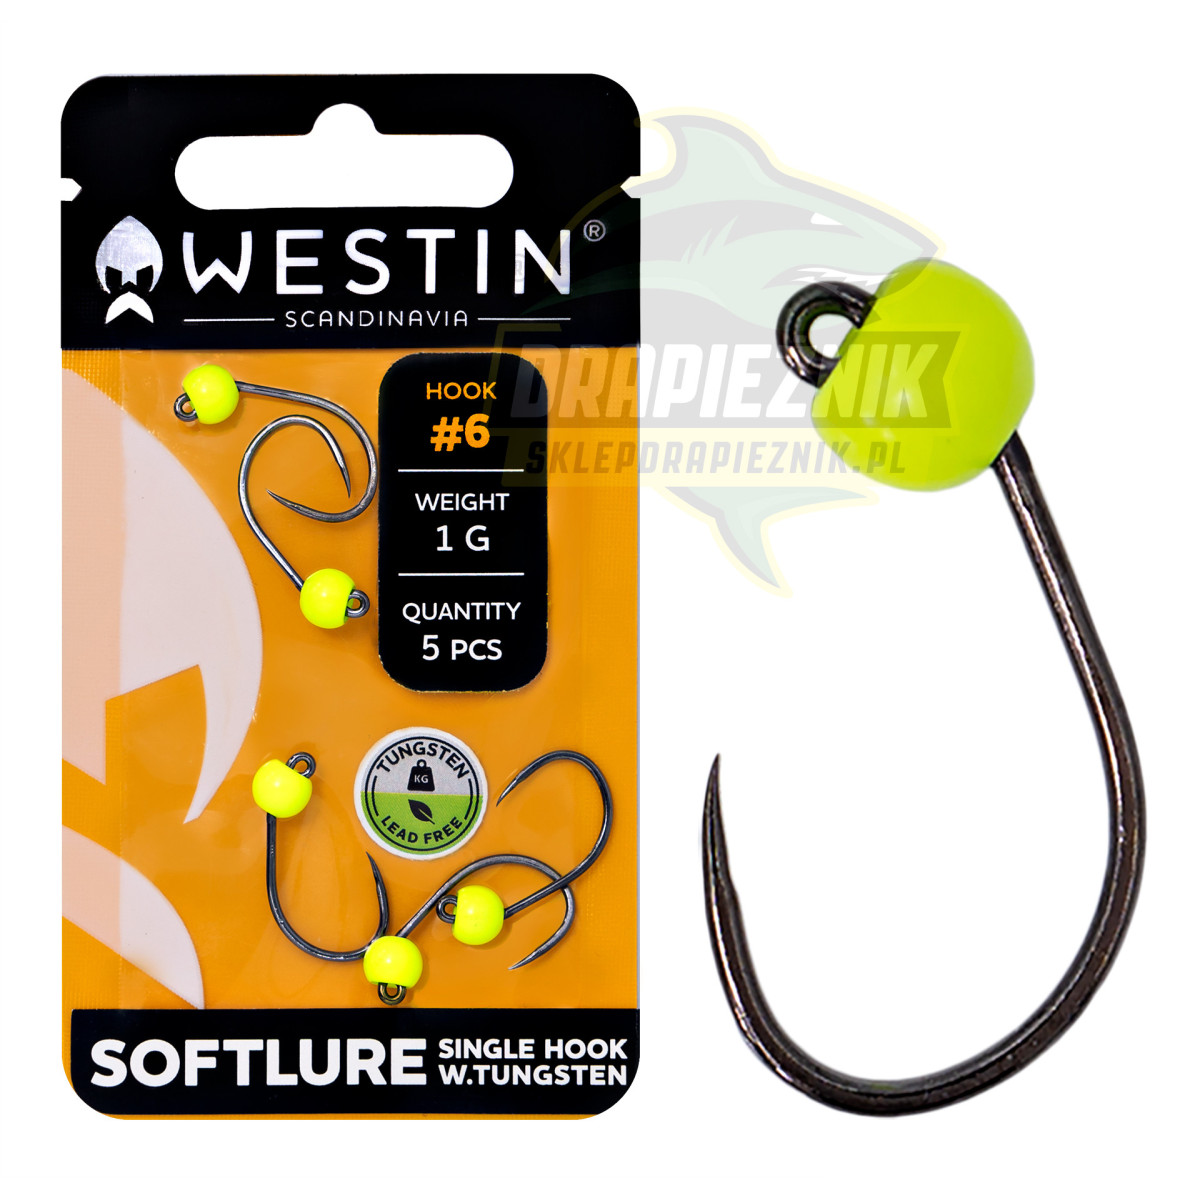 Główki Westin Softlure Single Hook Tungsten - YELLOW / hak 6 / 1.0g